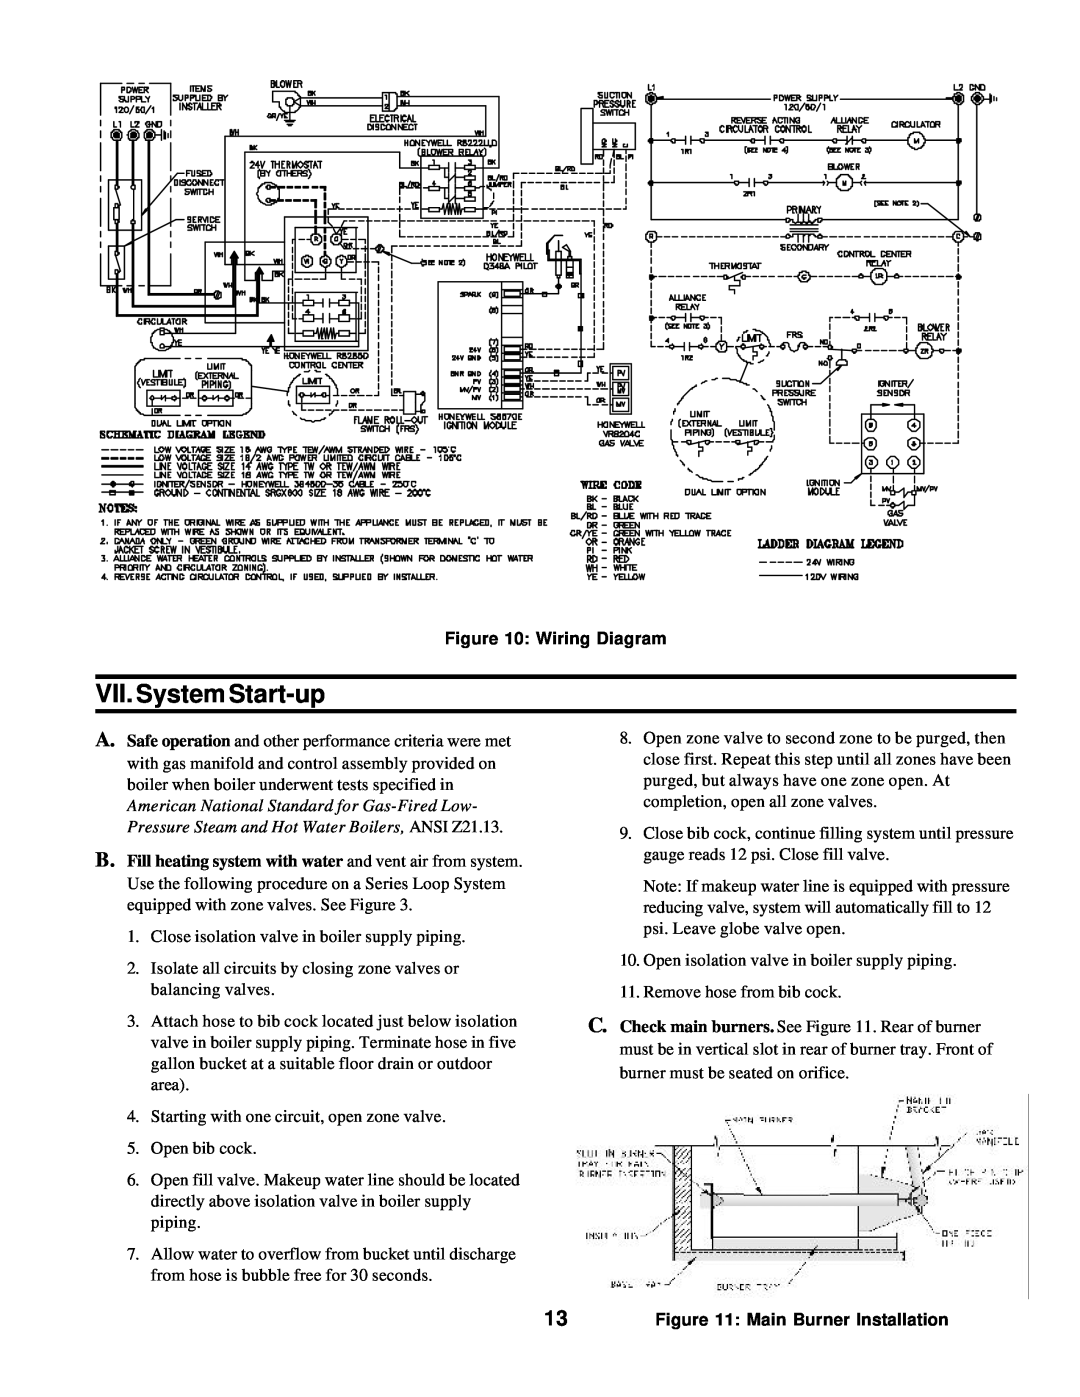 Burnham 20_PV_I manual VII. System Start-up, Wiring Diagram, Main Burner Installation 